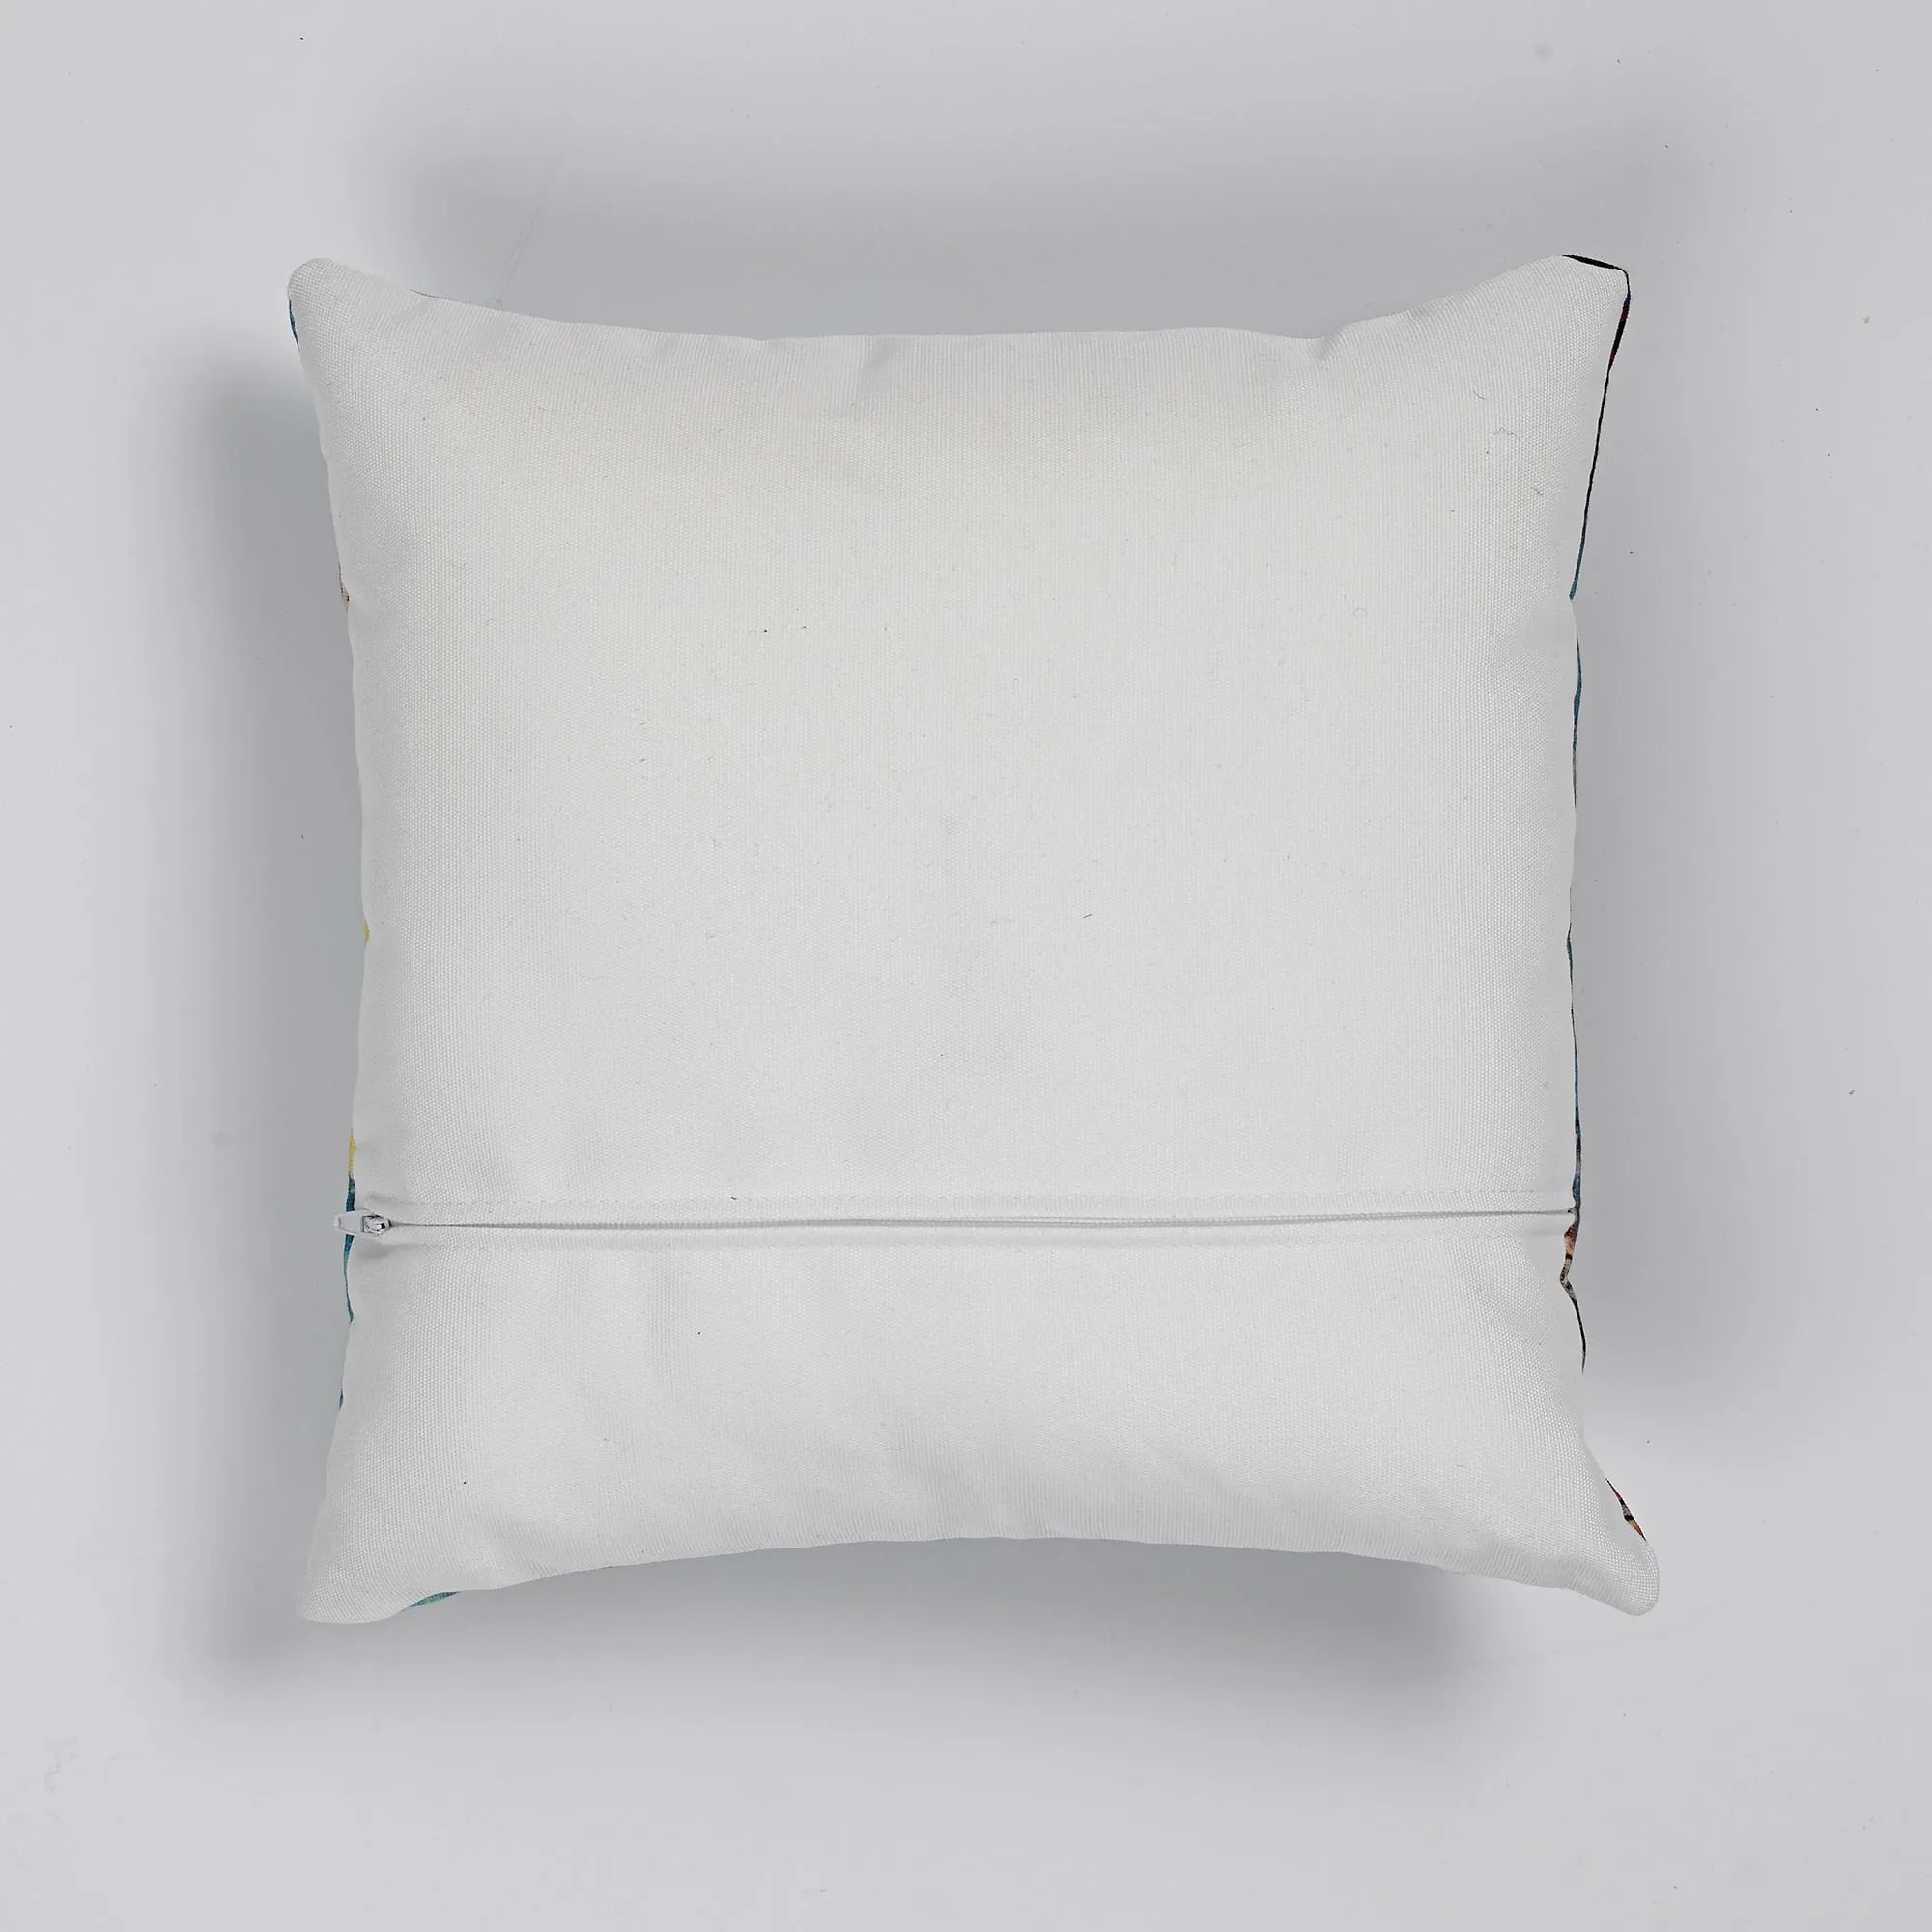 Aviary Green Cushion - Decorative Throw Pillow - Throw Pillows - Aesthetic Art